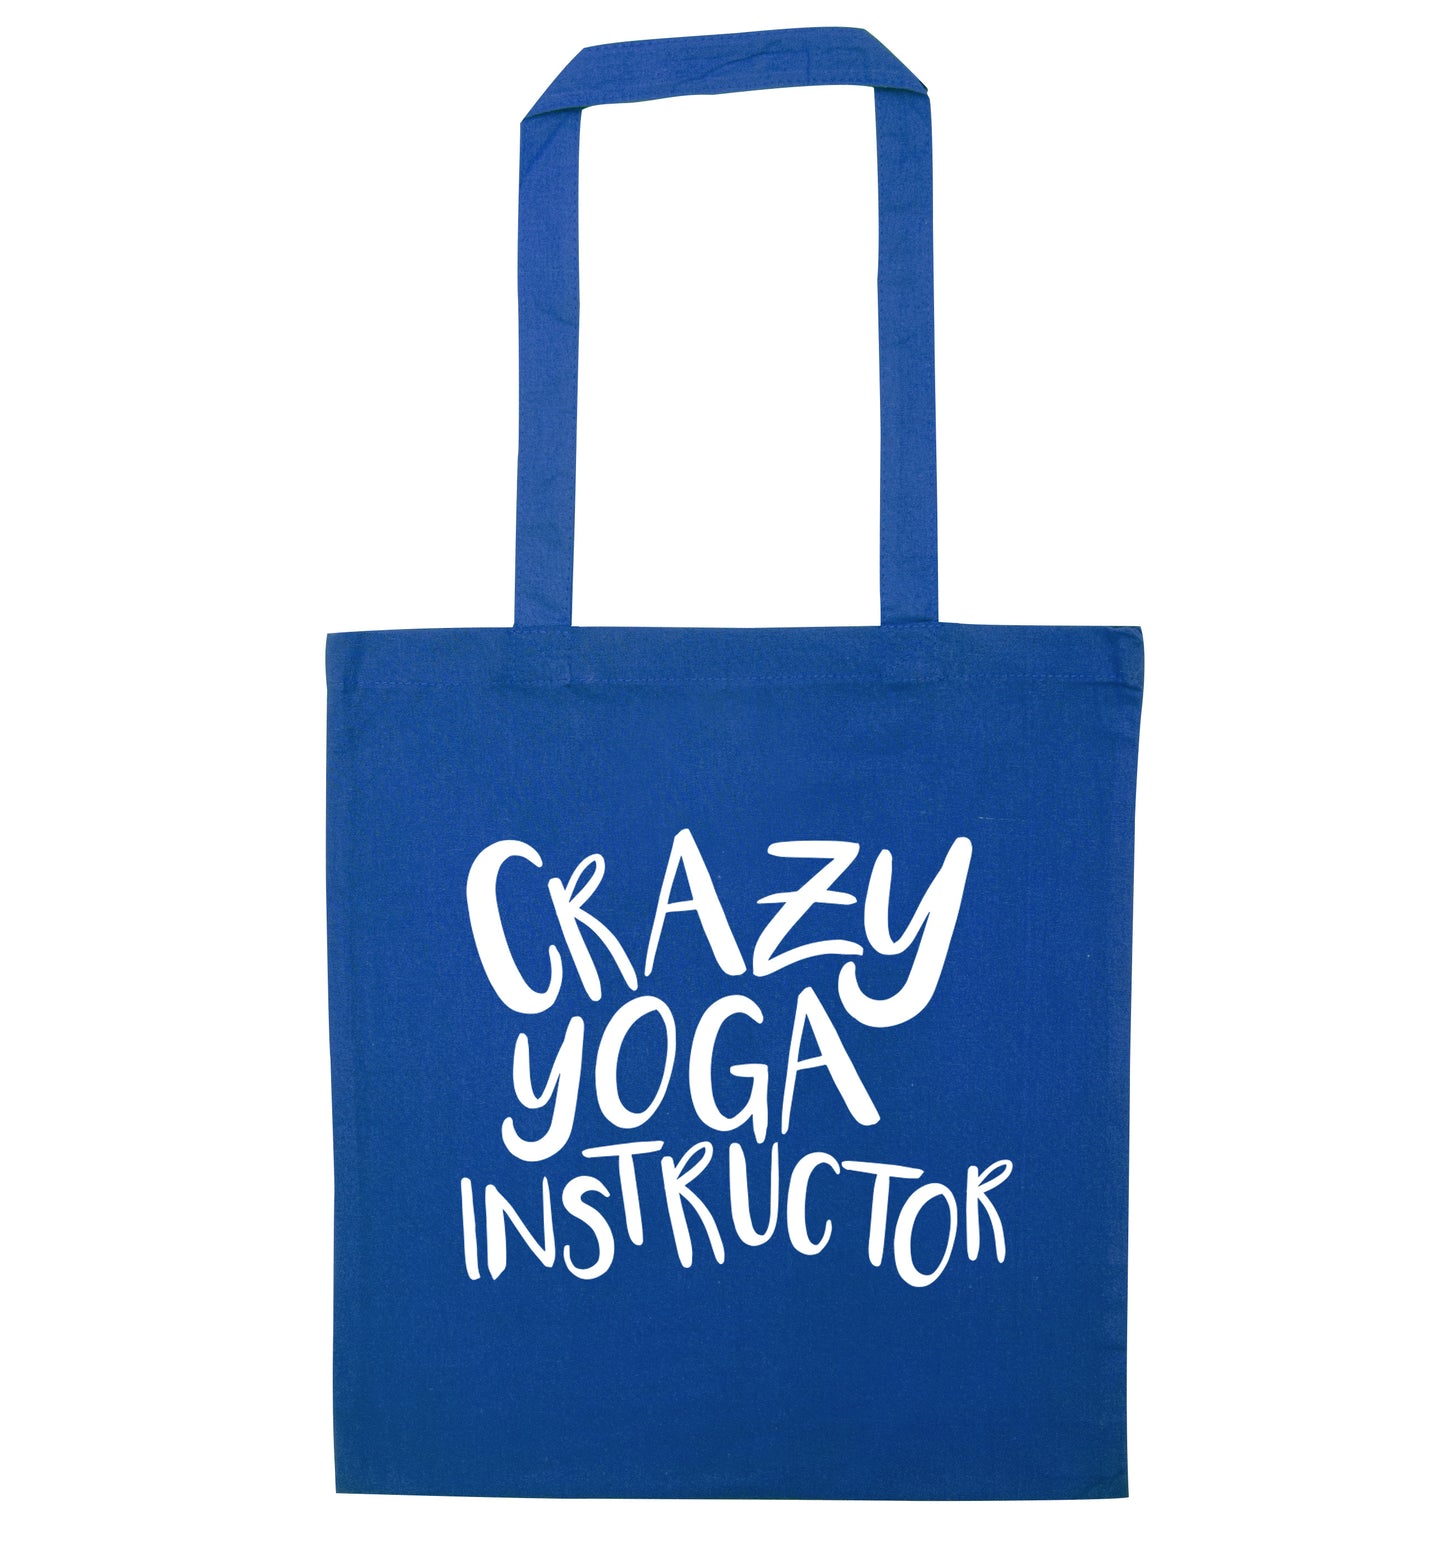 Crazy yoga instructor blue tote bag